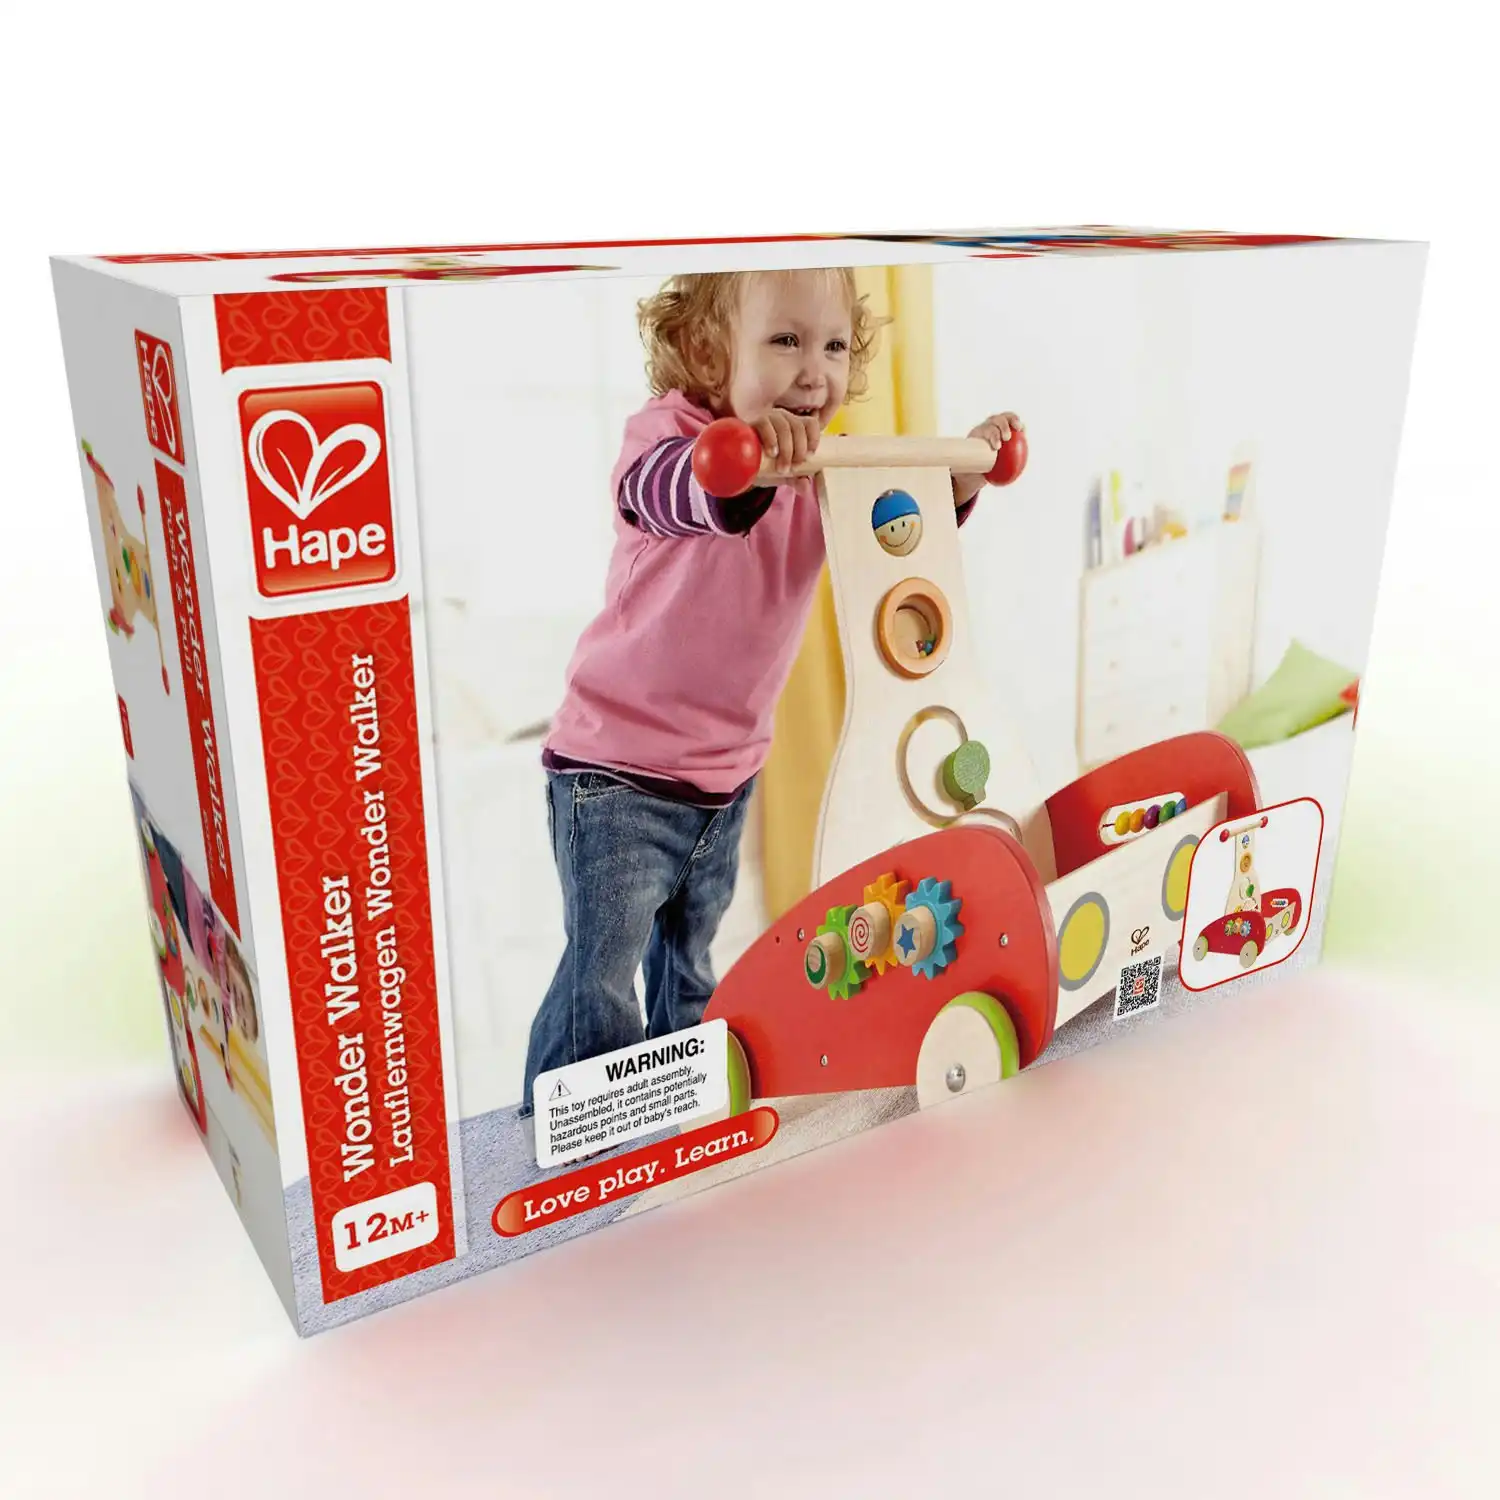 Hape Wonder Walker 50cm Educational/Activity Infant/Baby Wooden Toy/Play 12m+